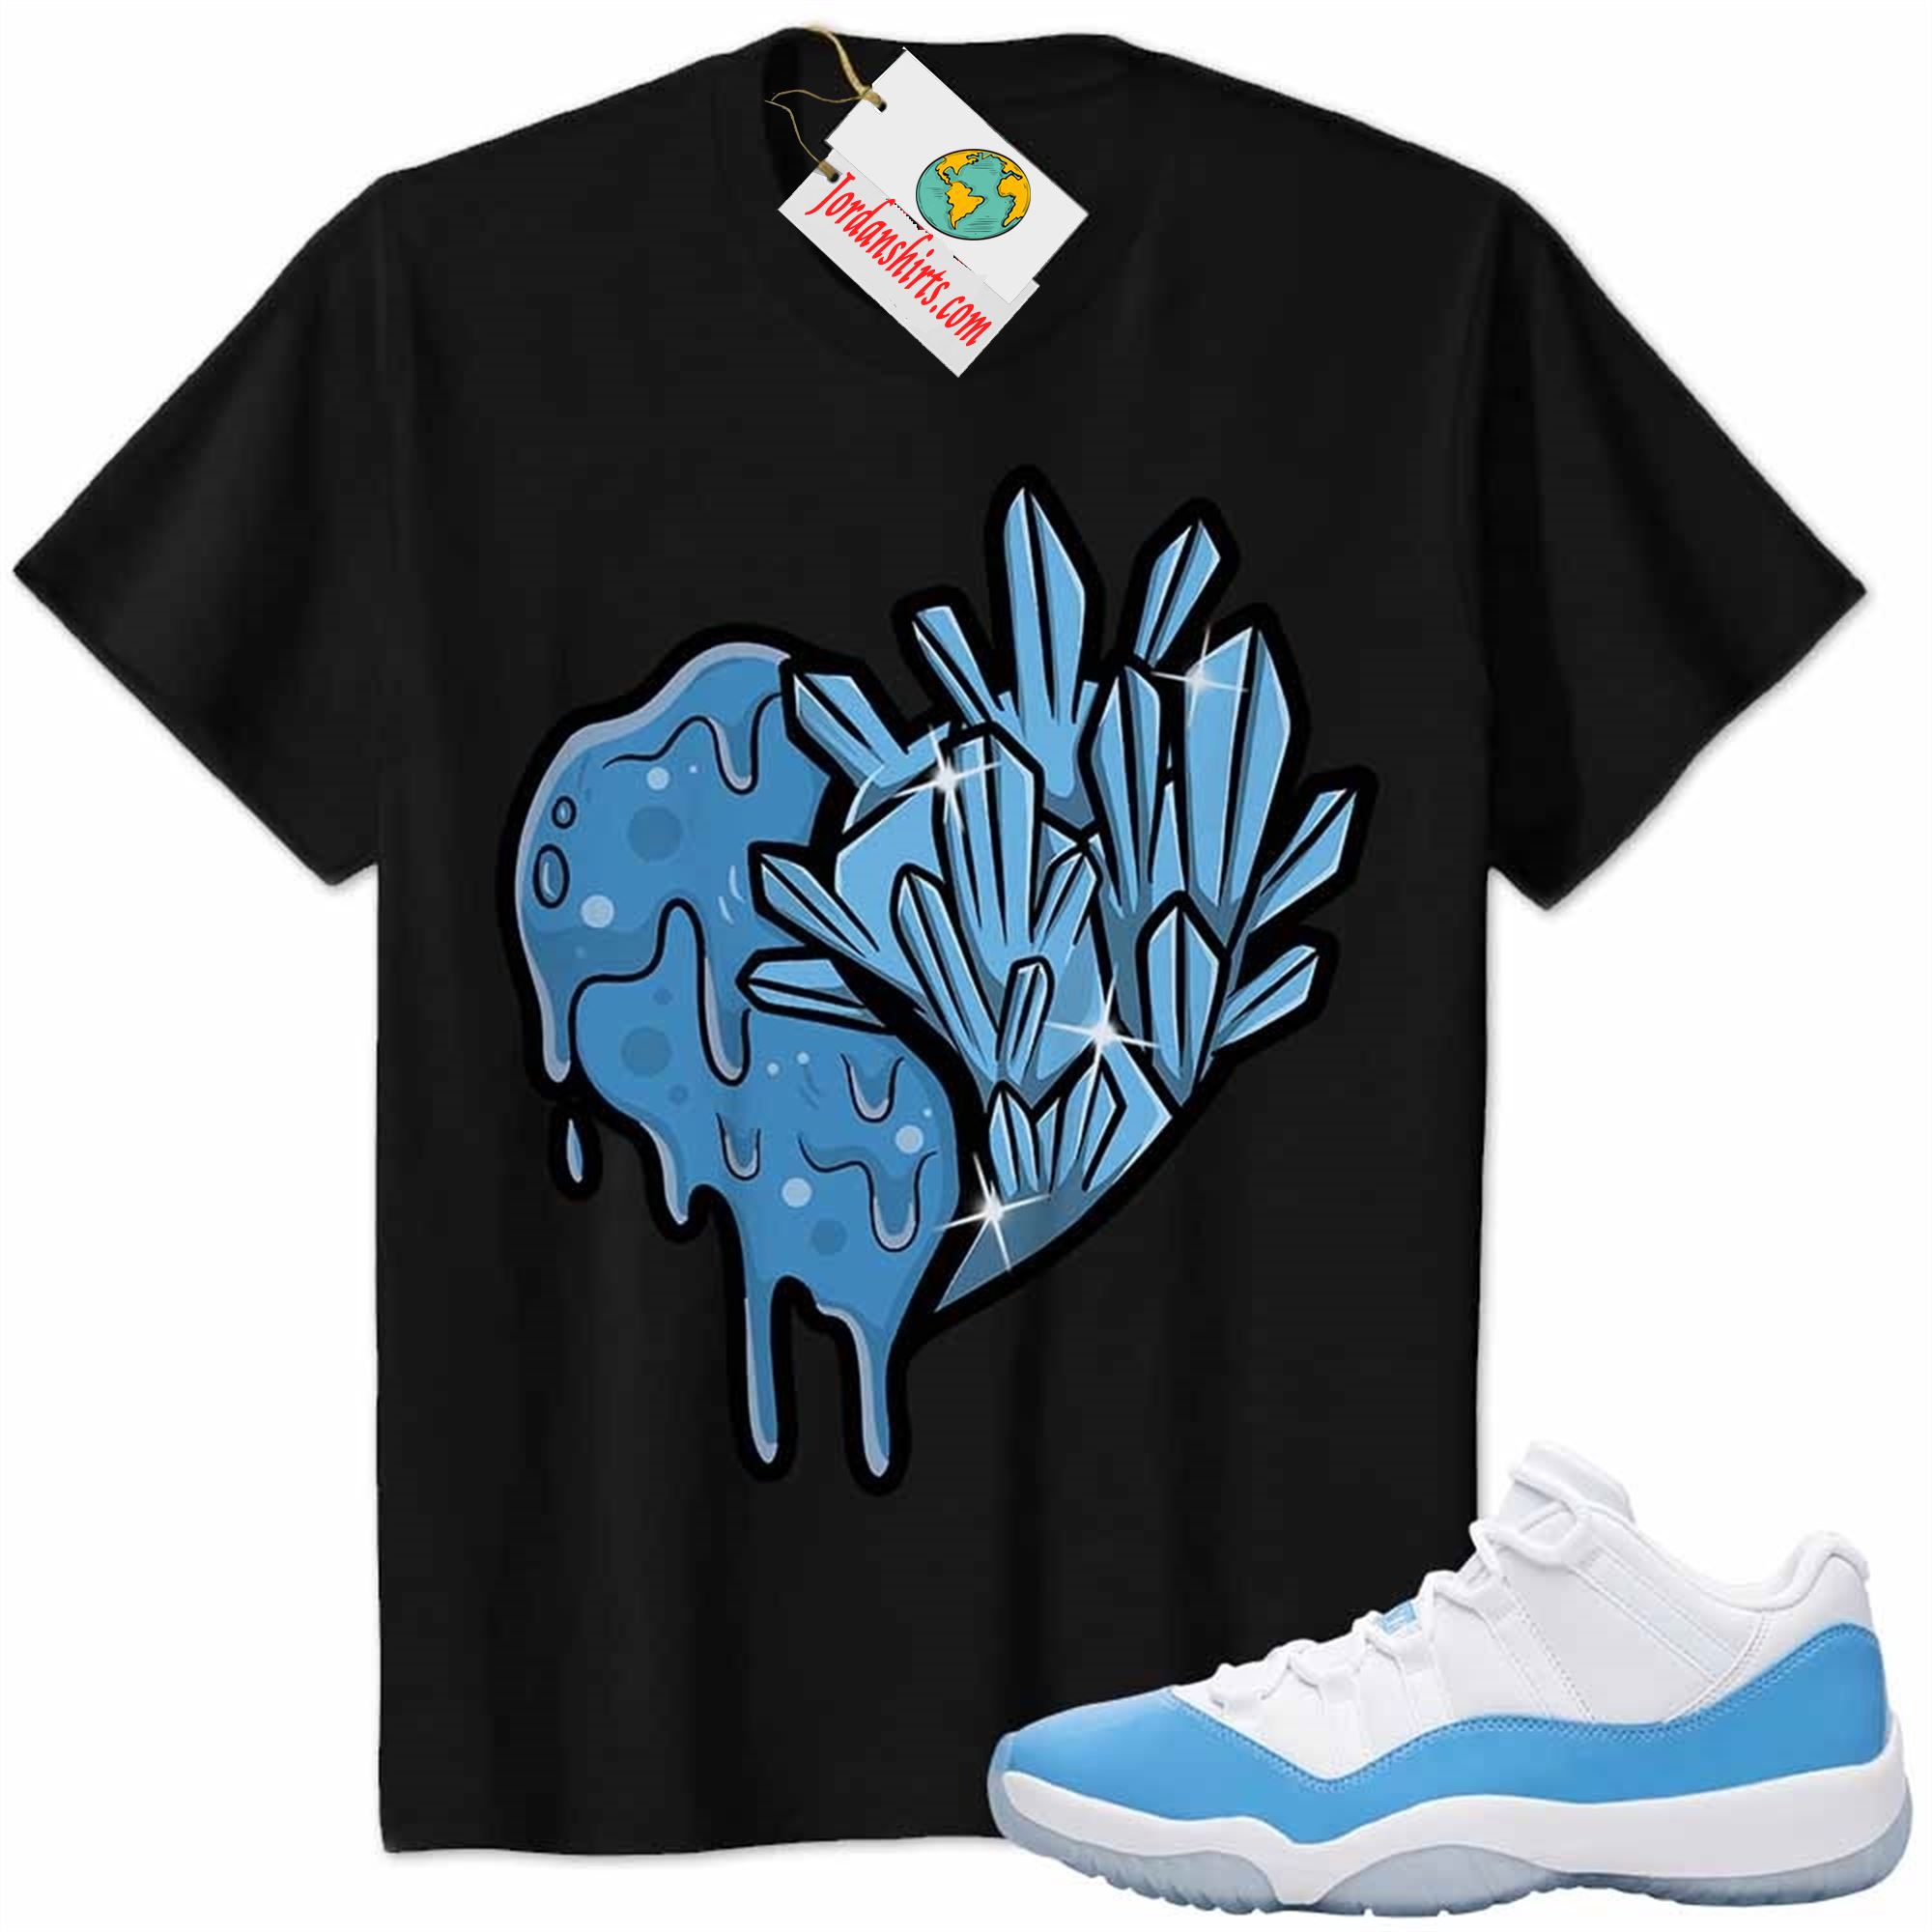 Jordan 11 Shirt, Crystal And Melt Heart Black Air Jordan 11 Unc 11s Full Size Up To 5xl